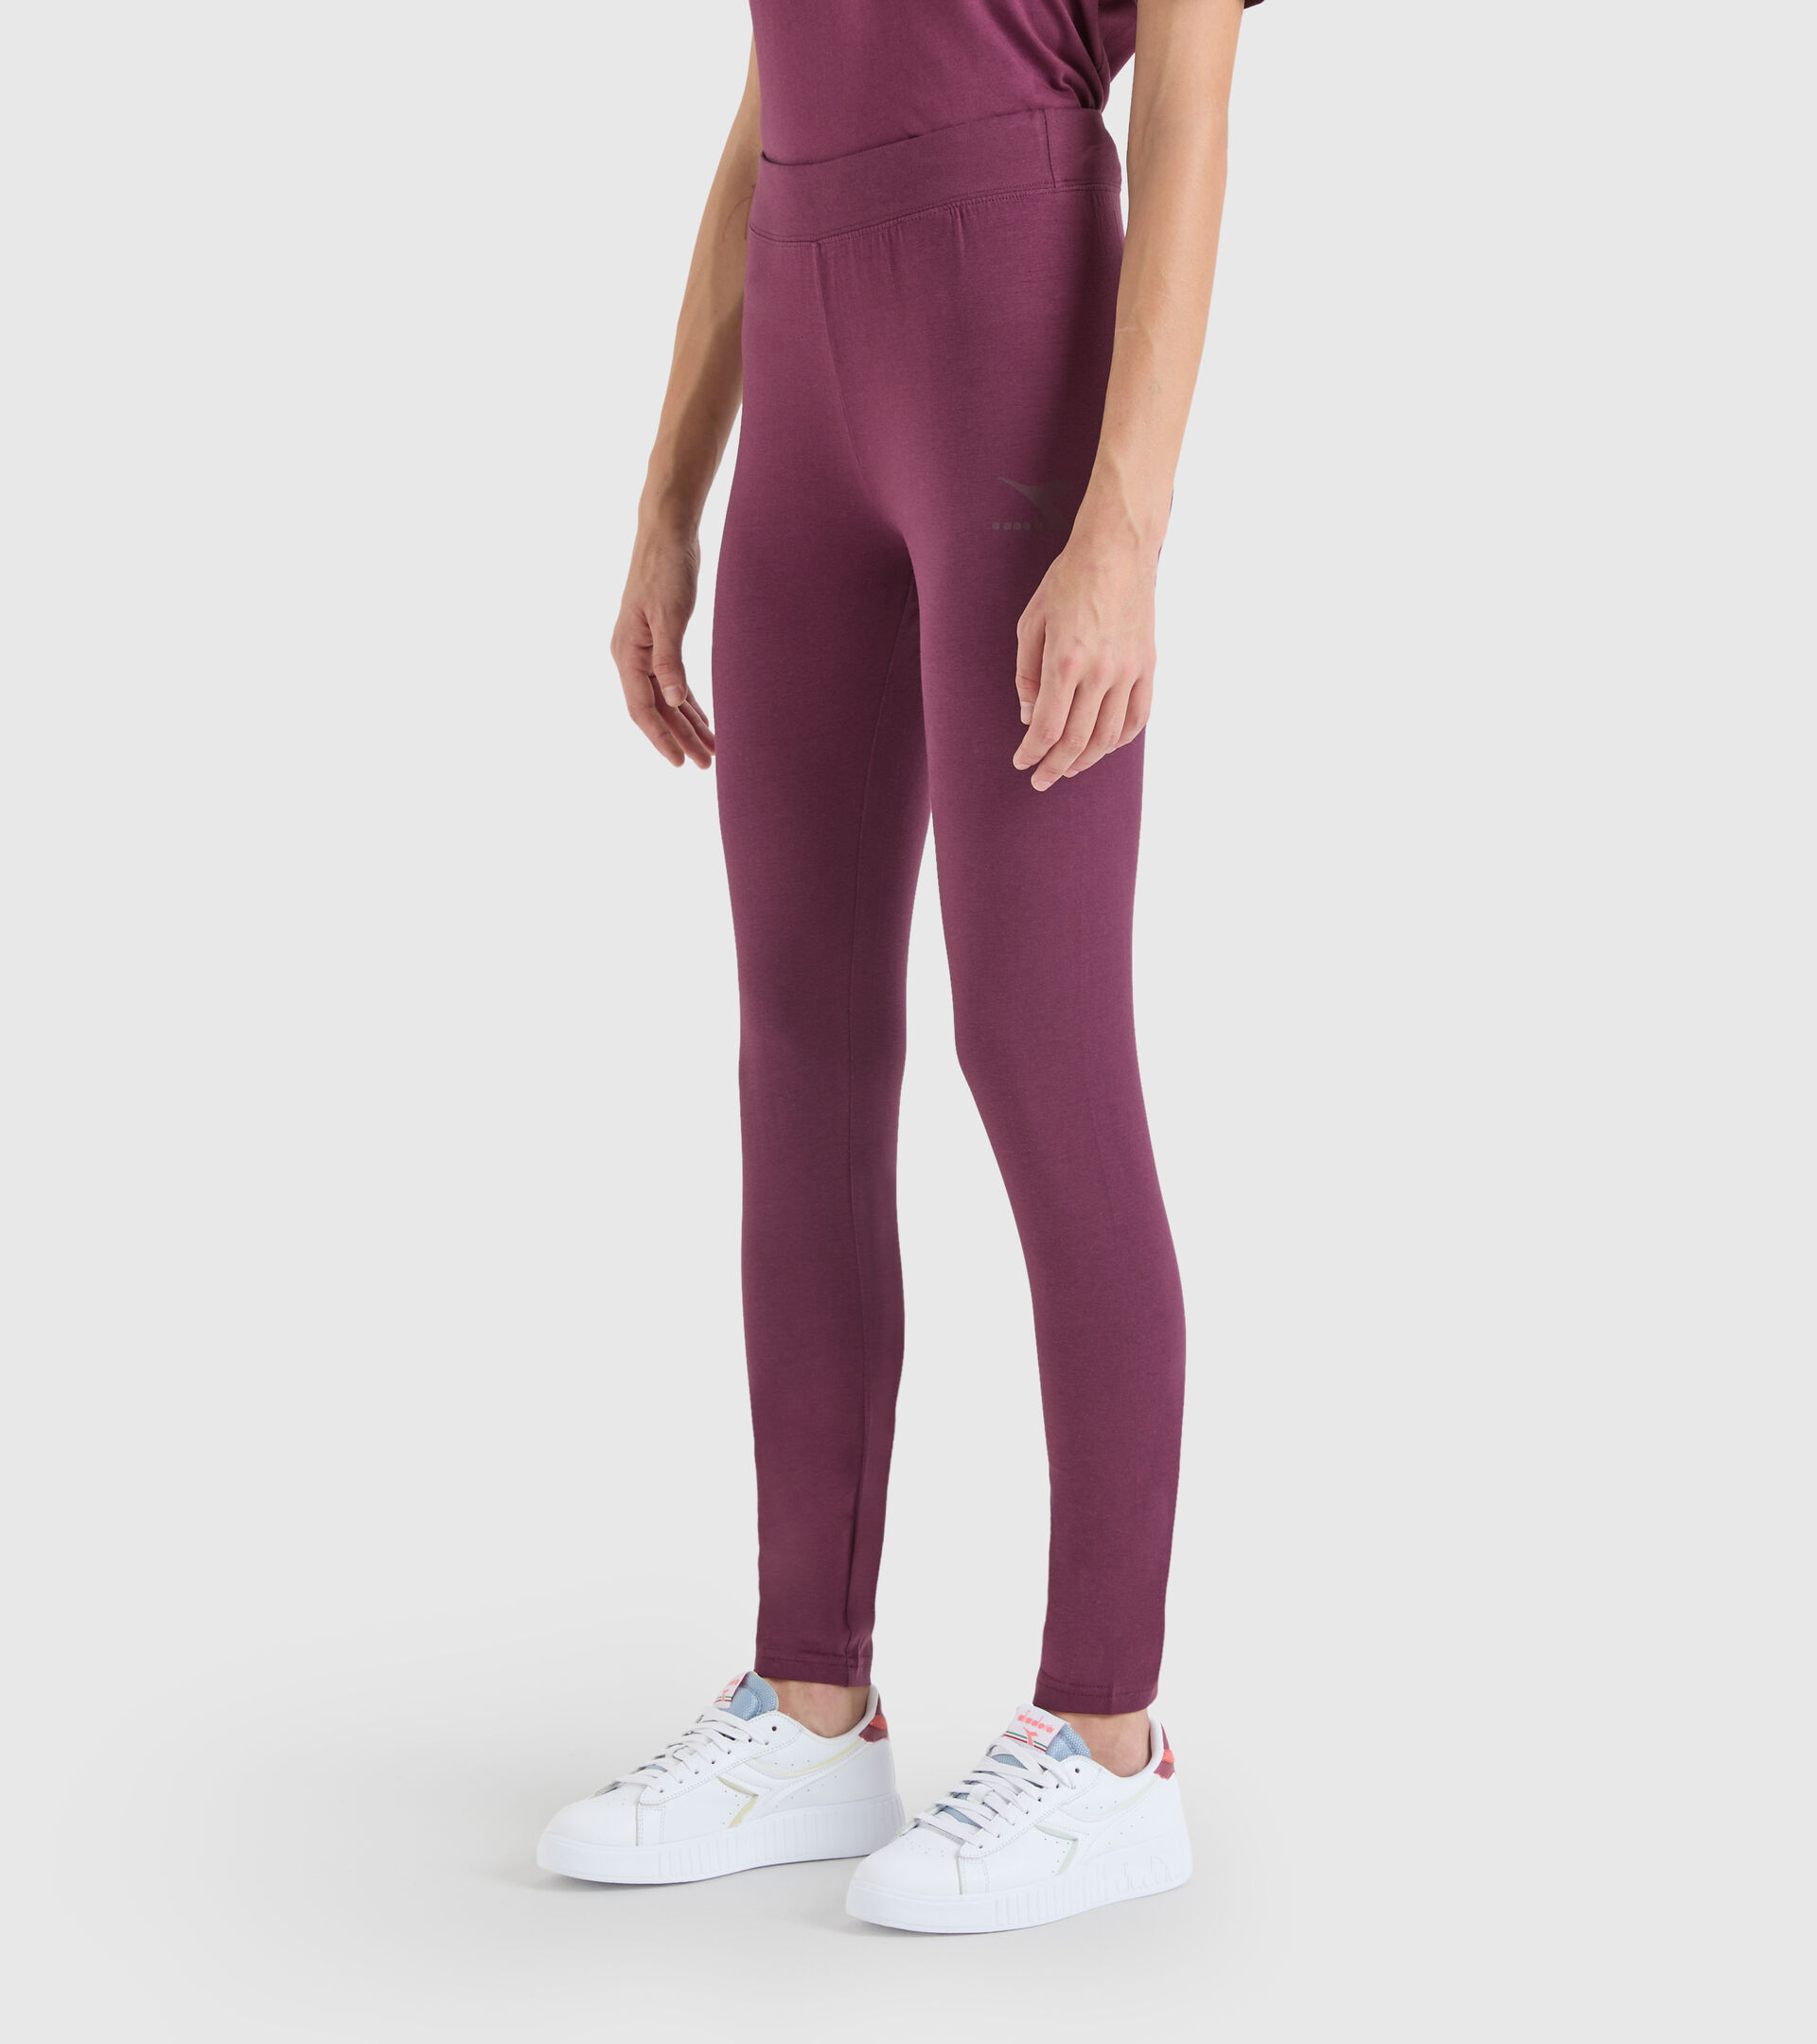 L. TIGHTS RUN CREW Running leggings - Women - Diadora Online Store US